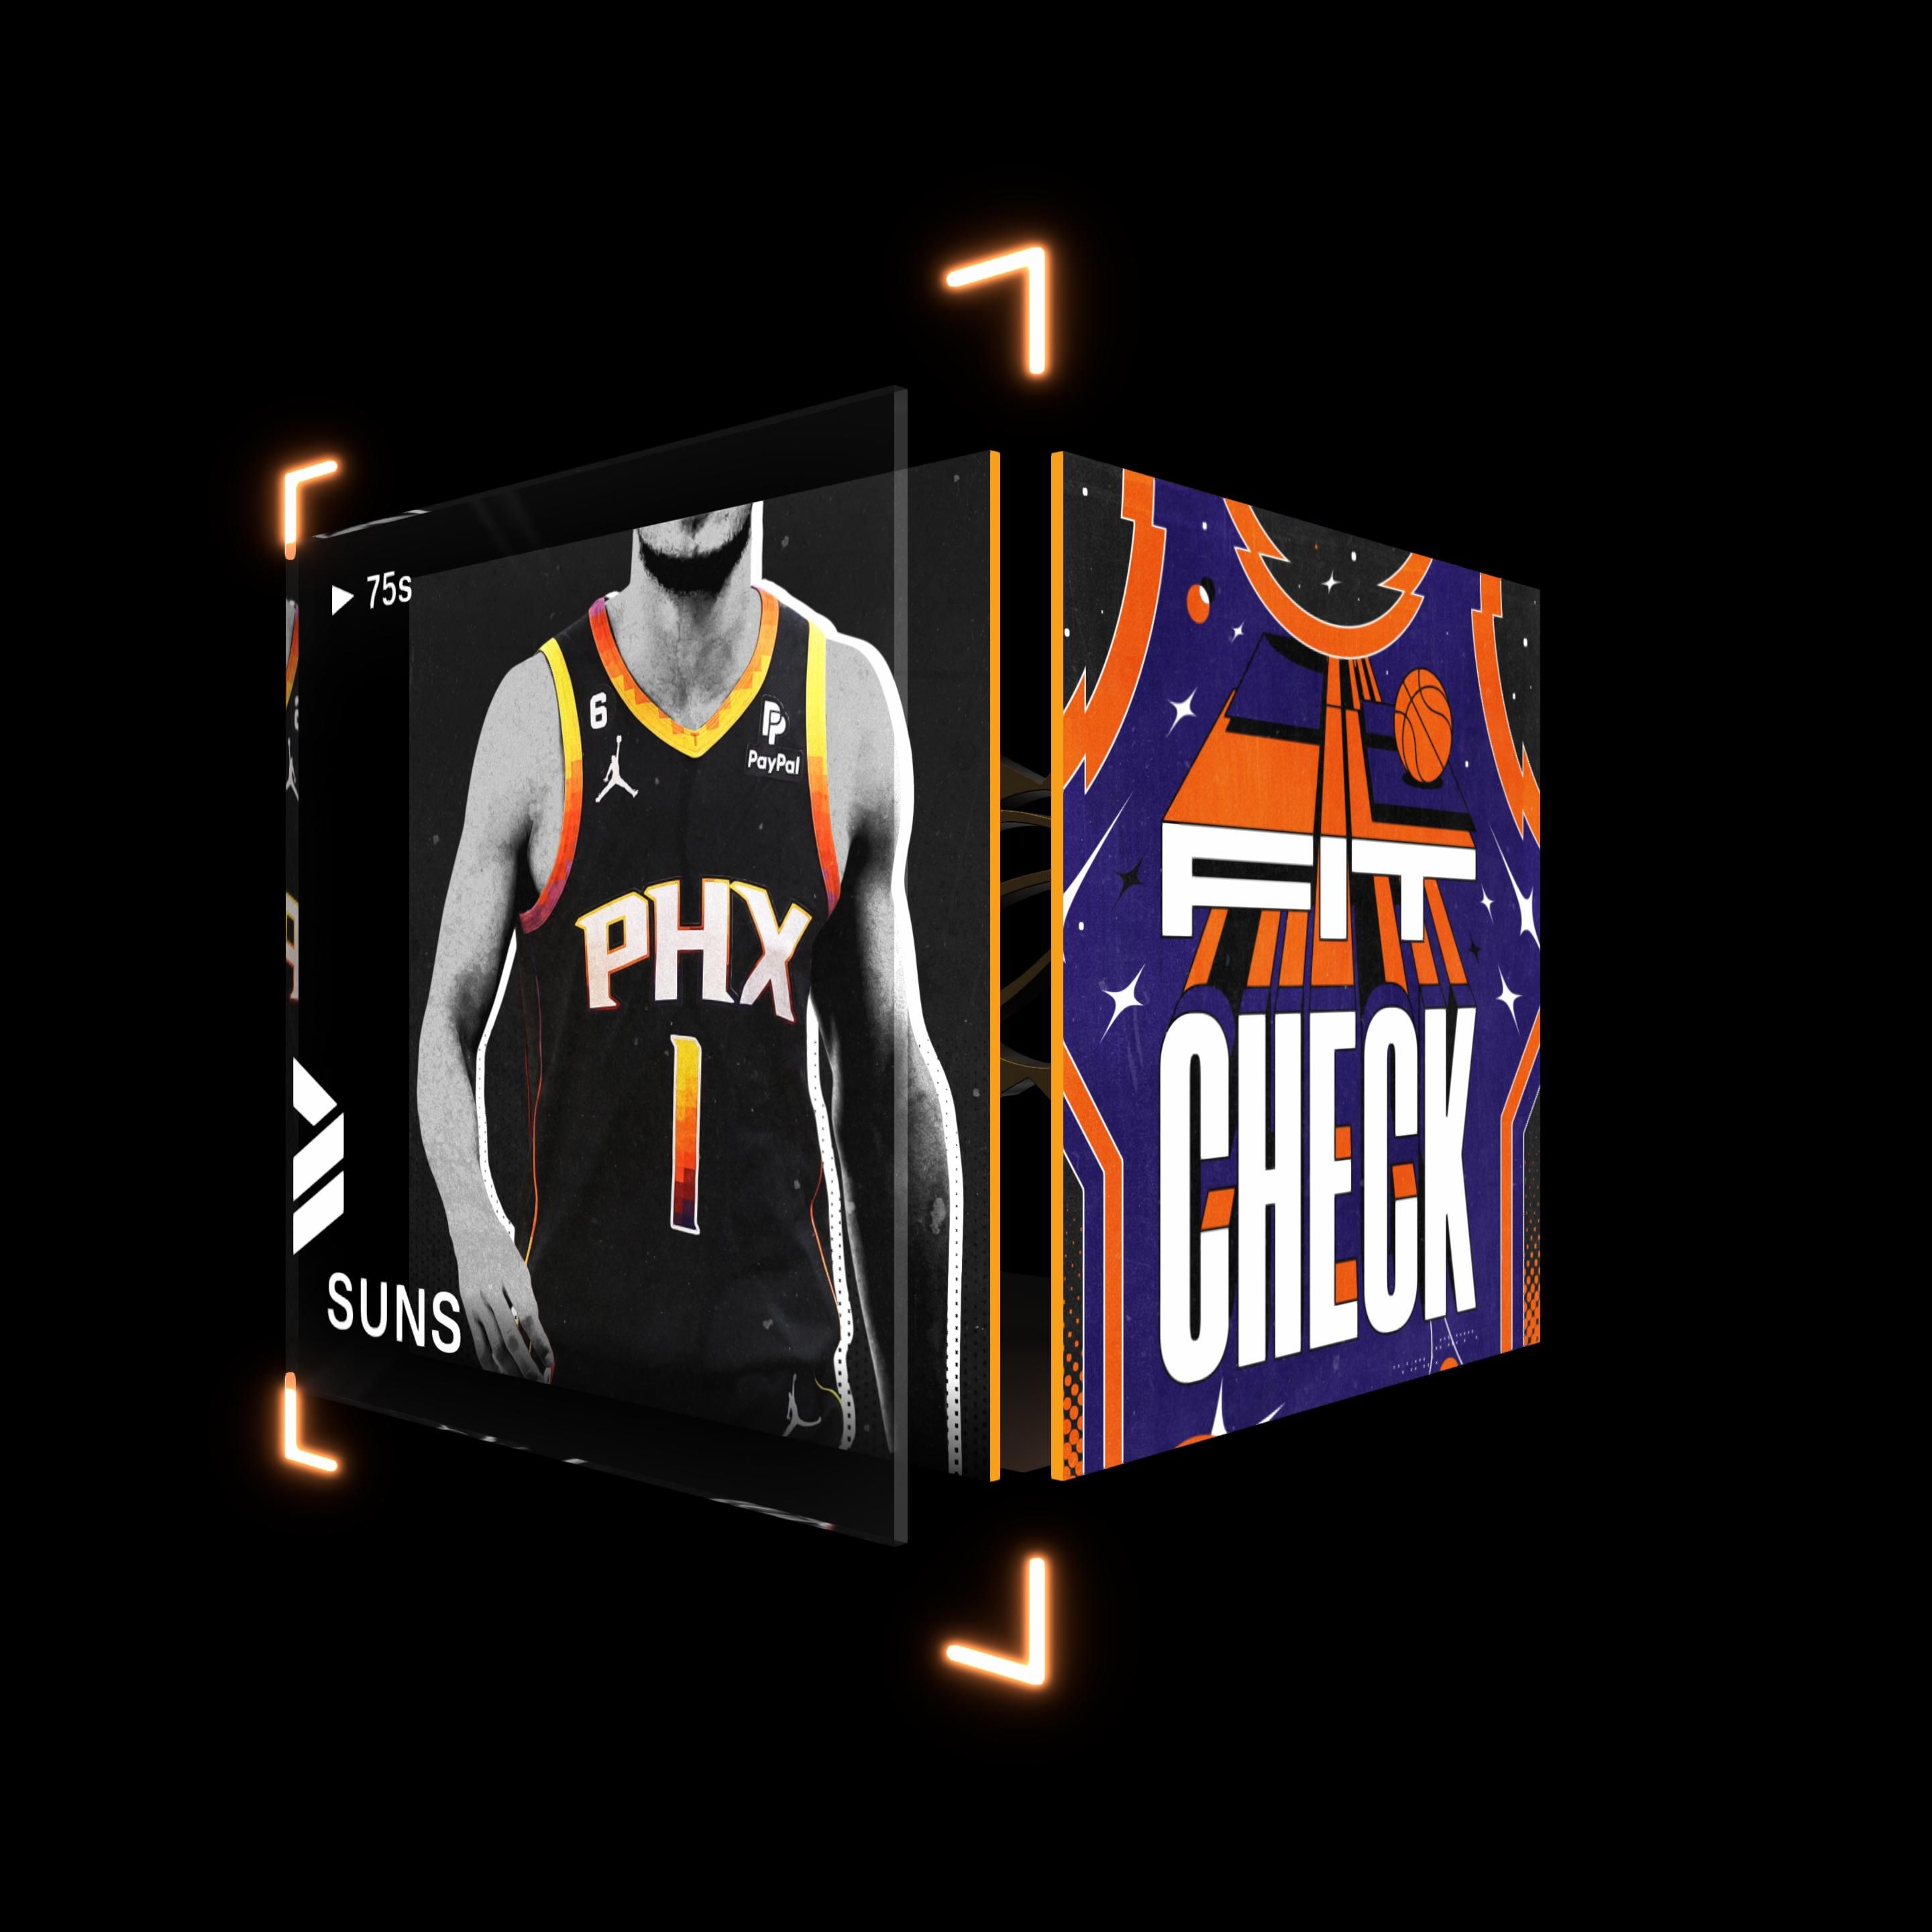 Phoenix Suns 22/23 City Edition Uniform: Celebration of Native